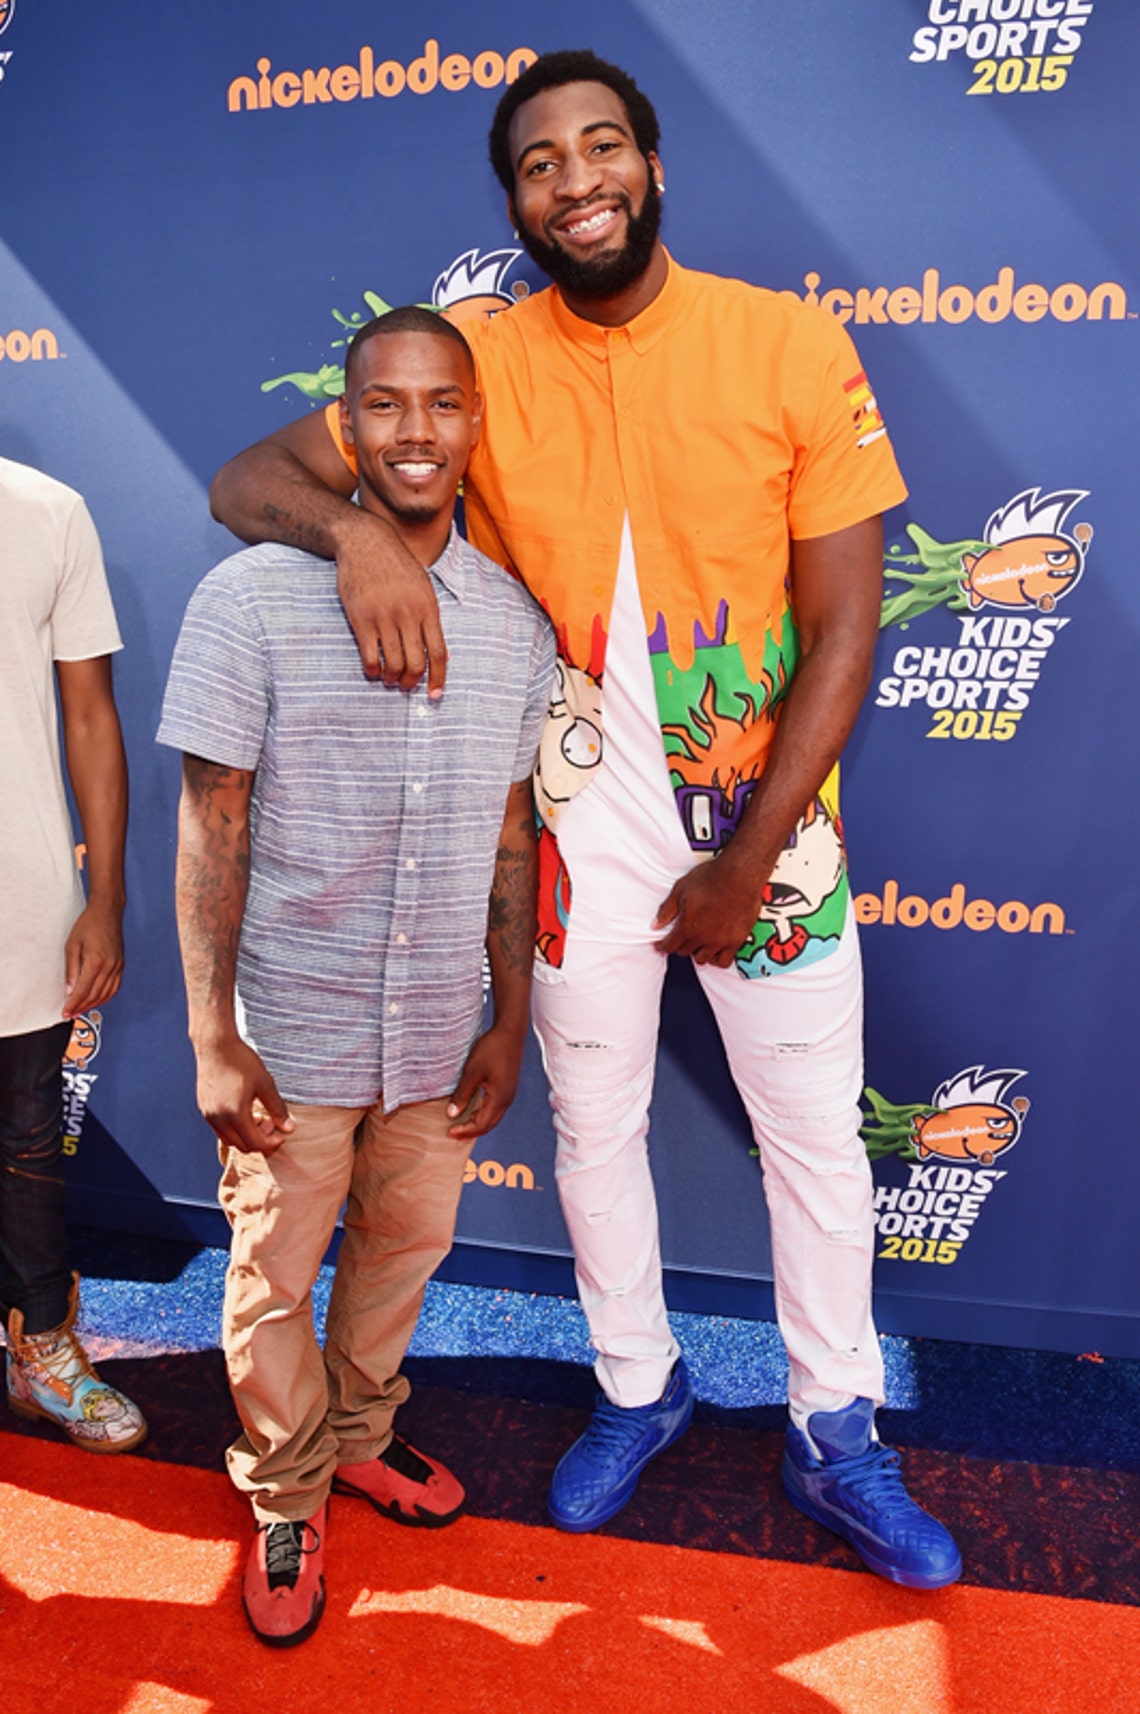 Nickelodeon's Kids' Choice Awards 2015